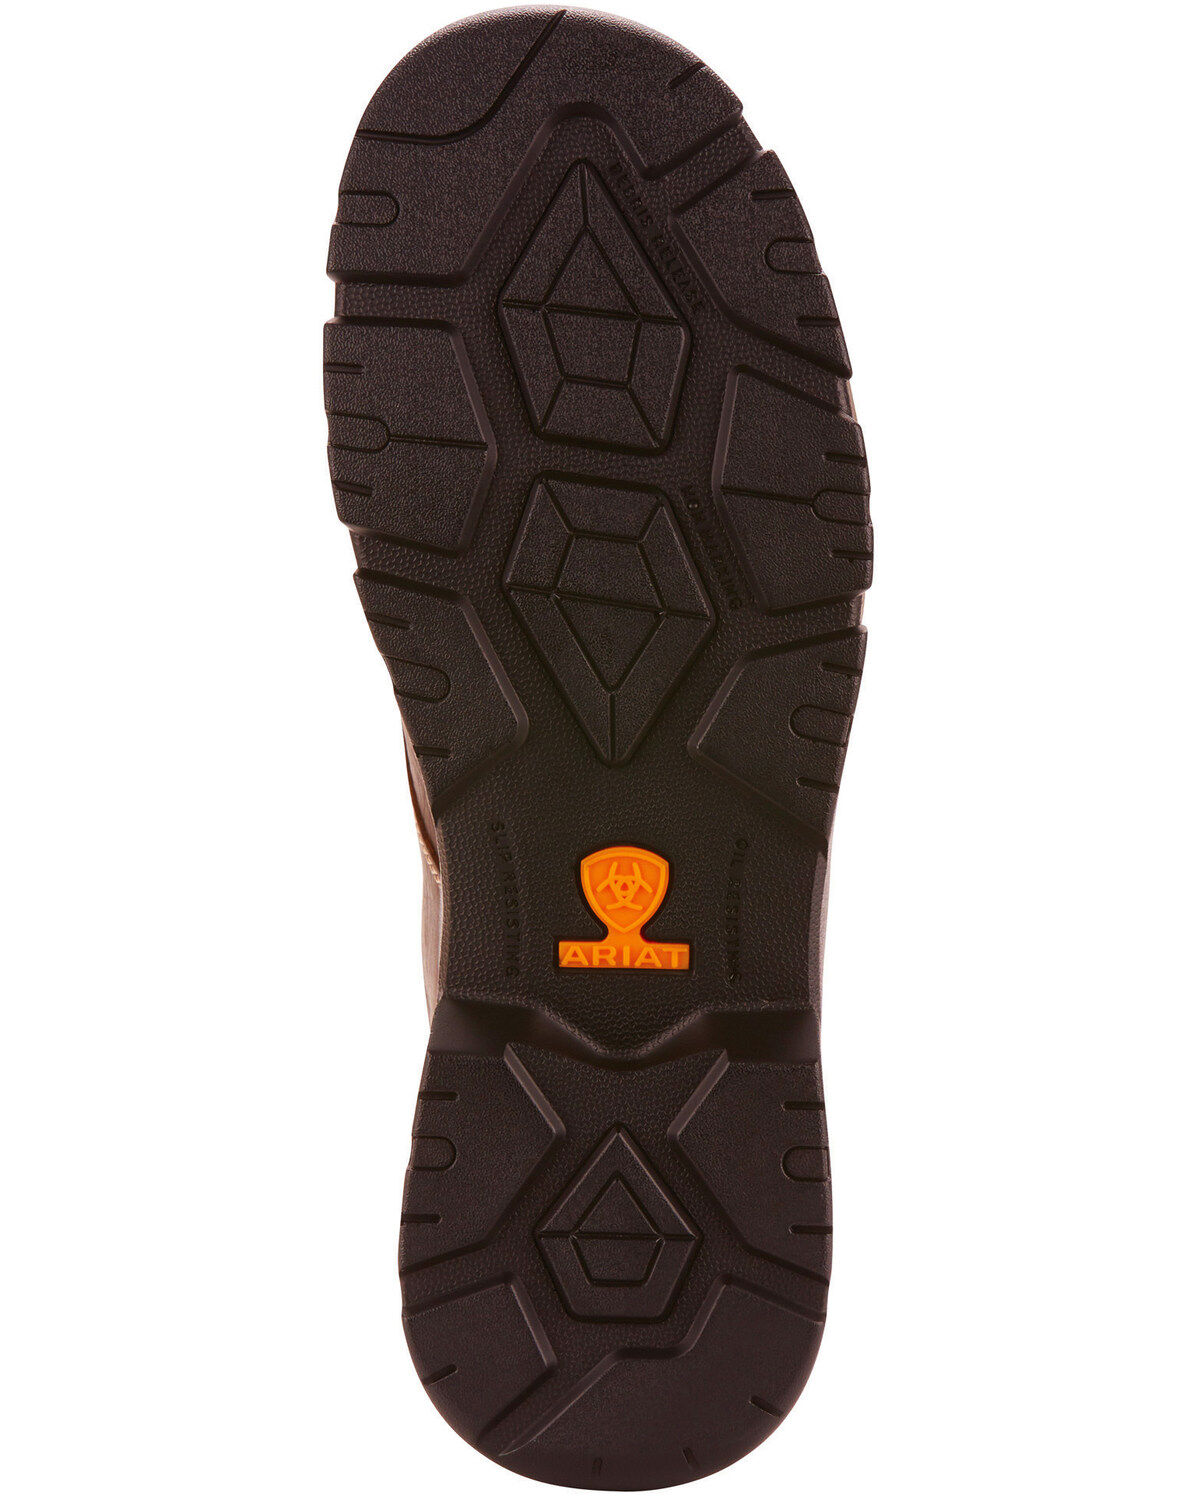 edge lte chukka waterproof composite toe work boot